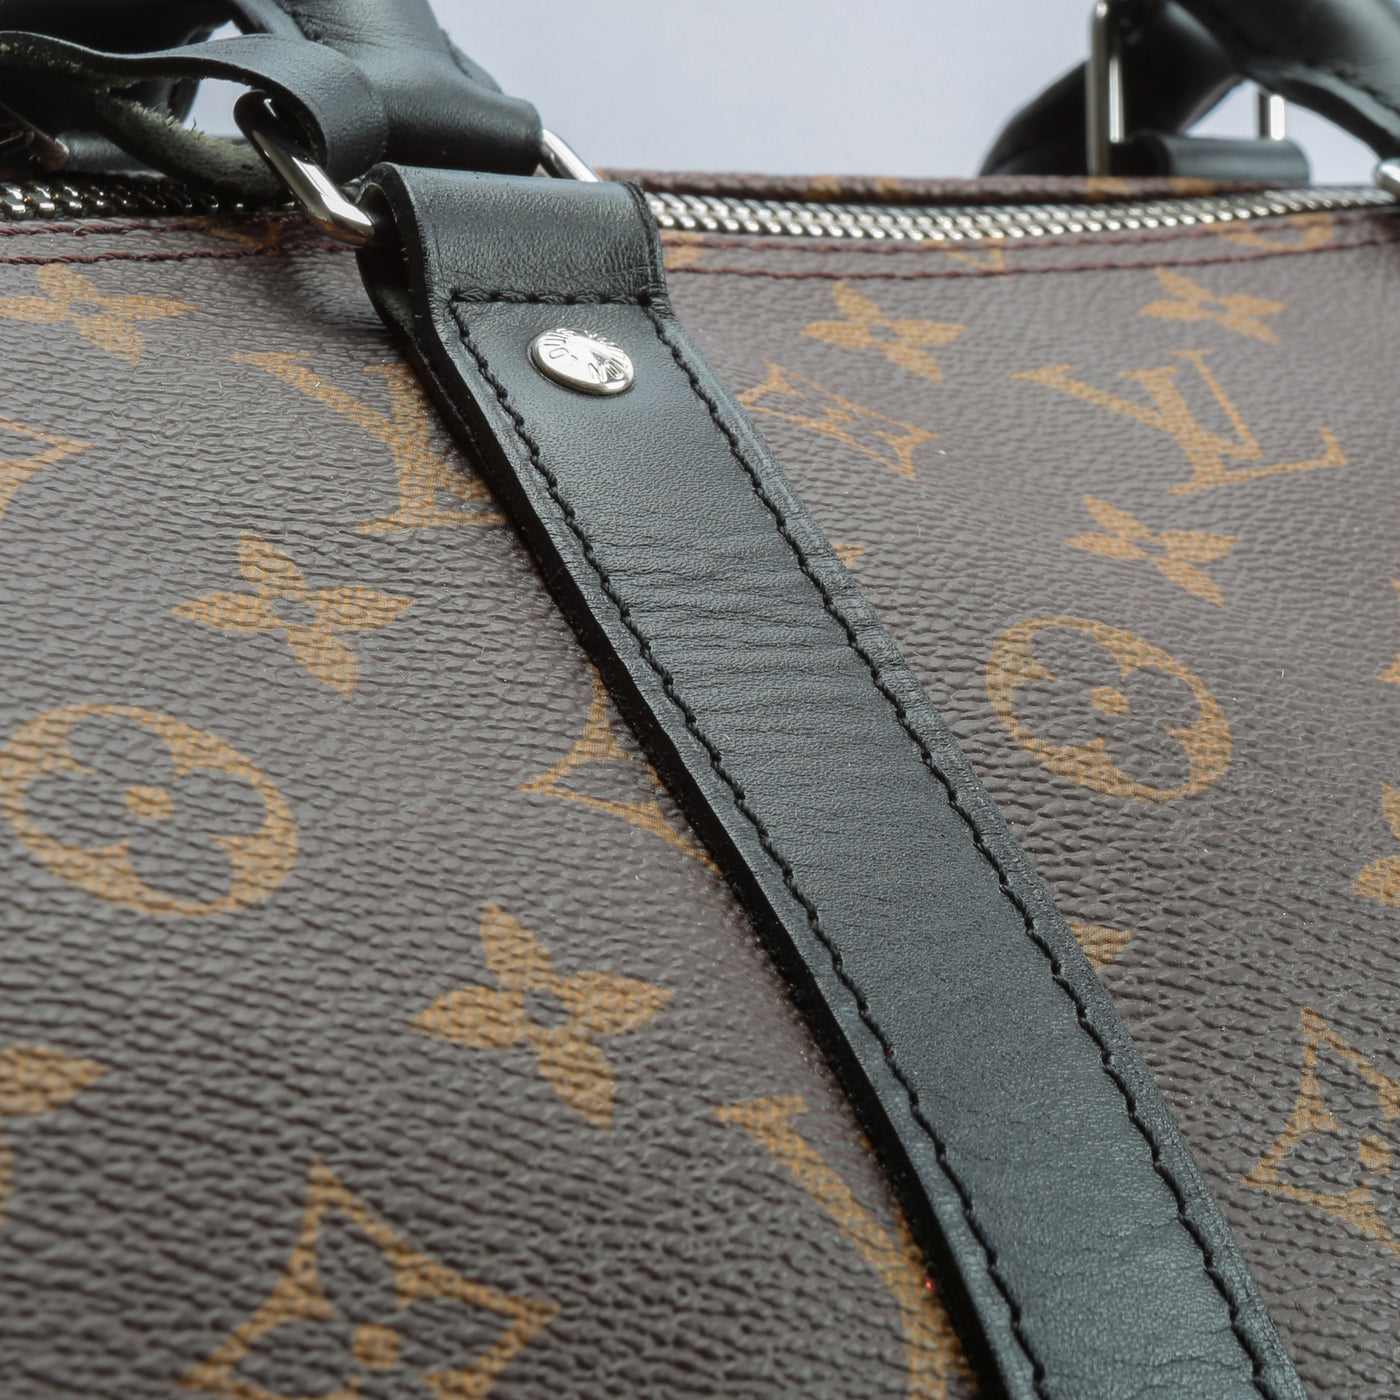 Louis Vuitton' Keepall 55 Monogram Empreinte Leather Review 